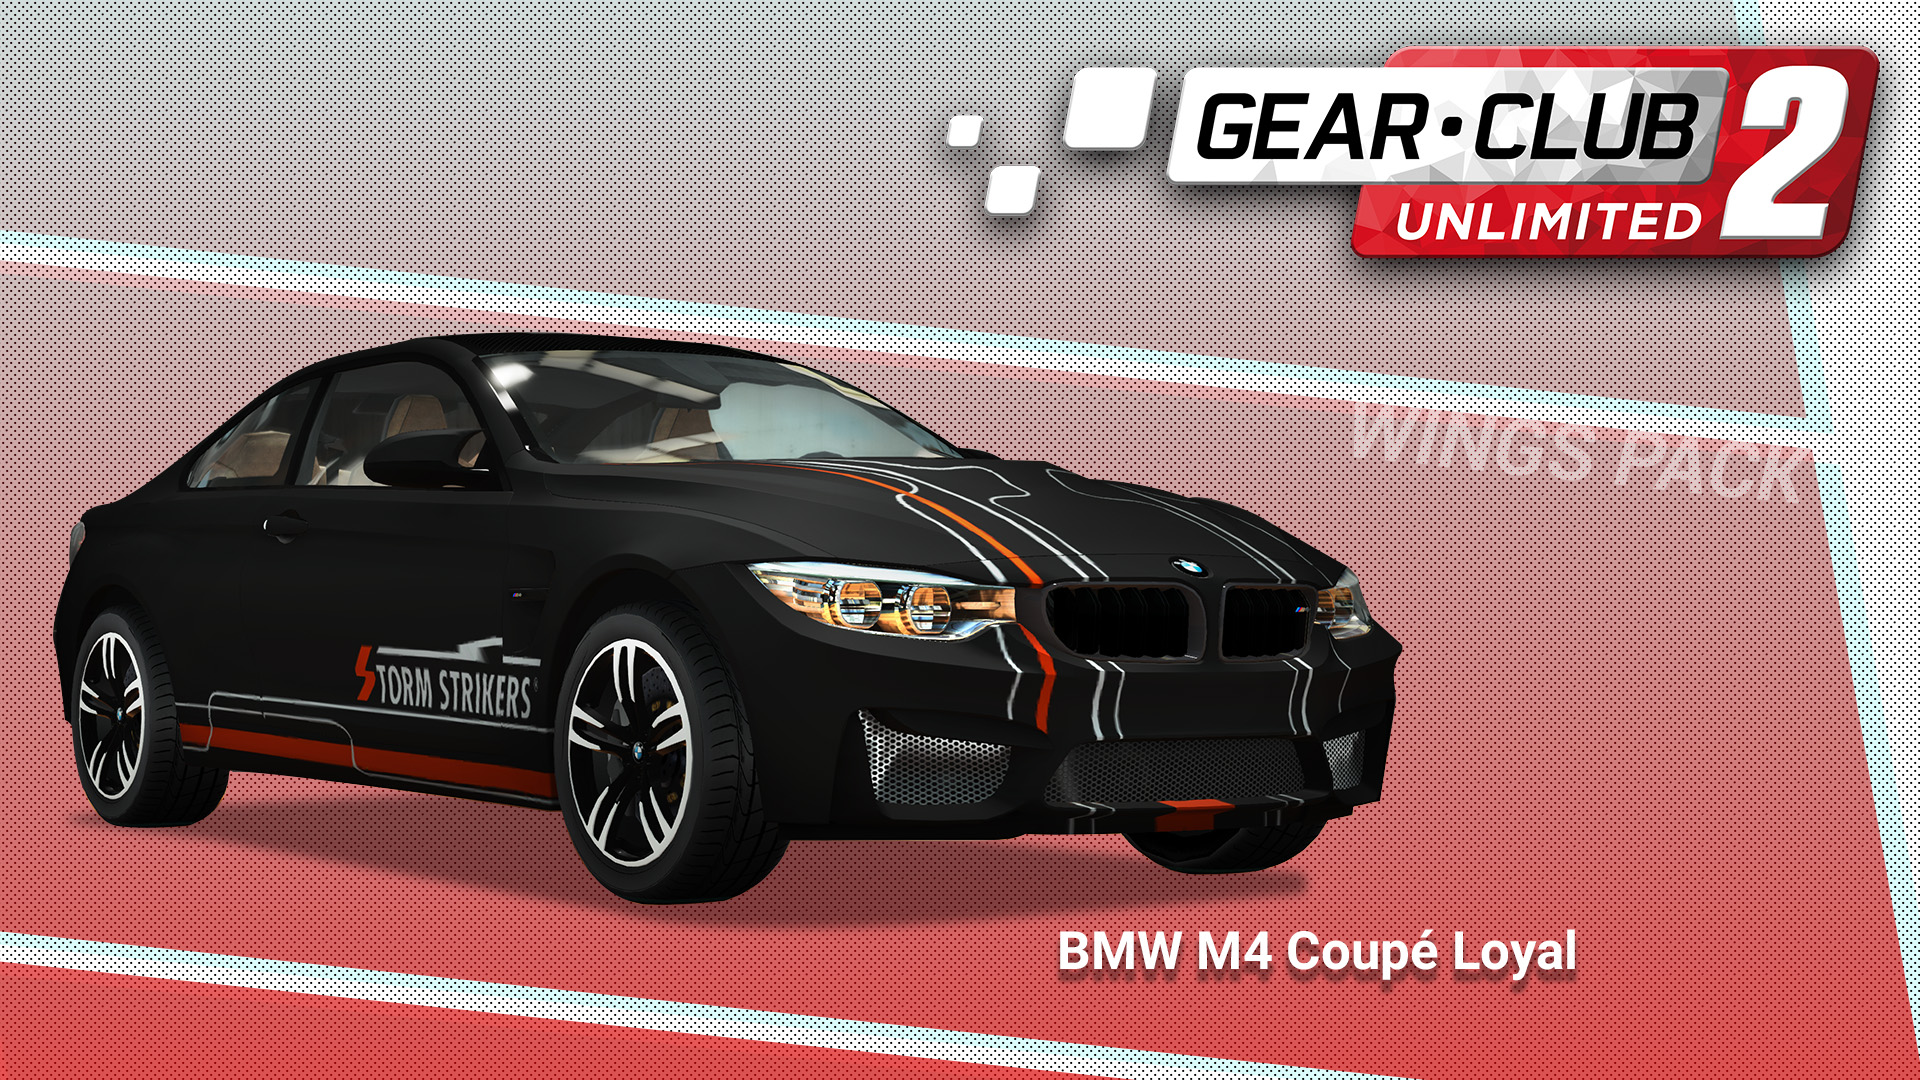 BMW M4 Coupé Loyal 1 - Gear.Club Unlimited 2